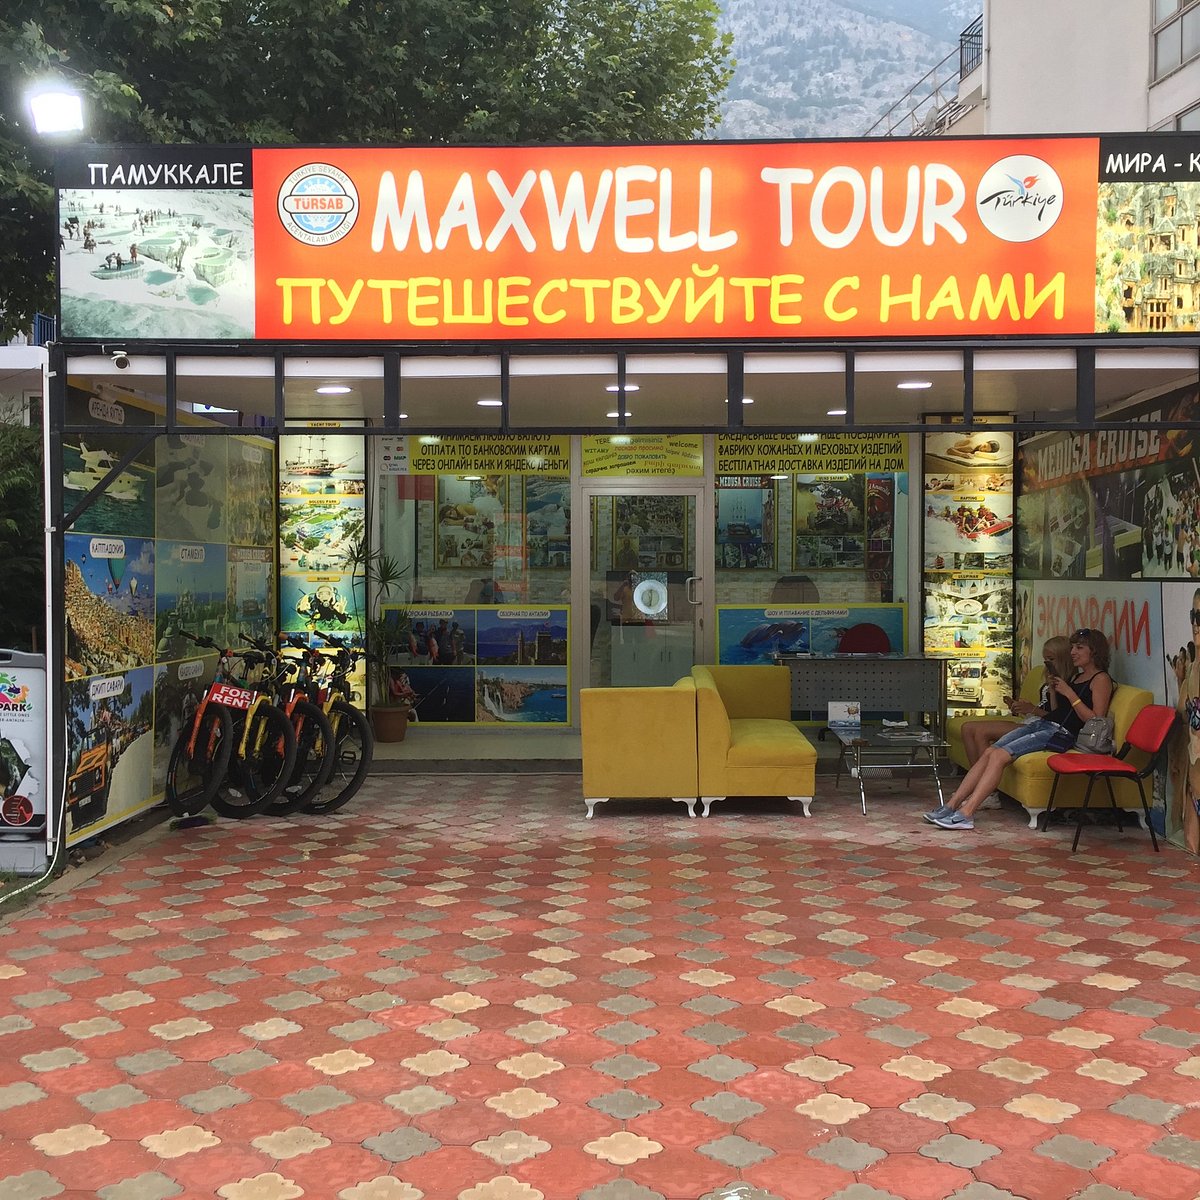 Maxwell Tour 케메르 Maxwell Tour의 리뷰 트립어드바이저